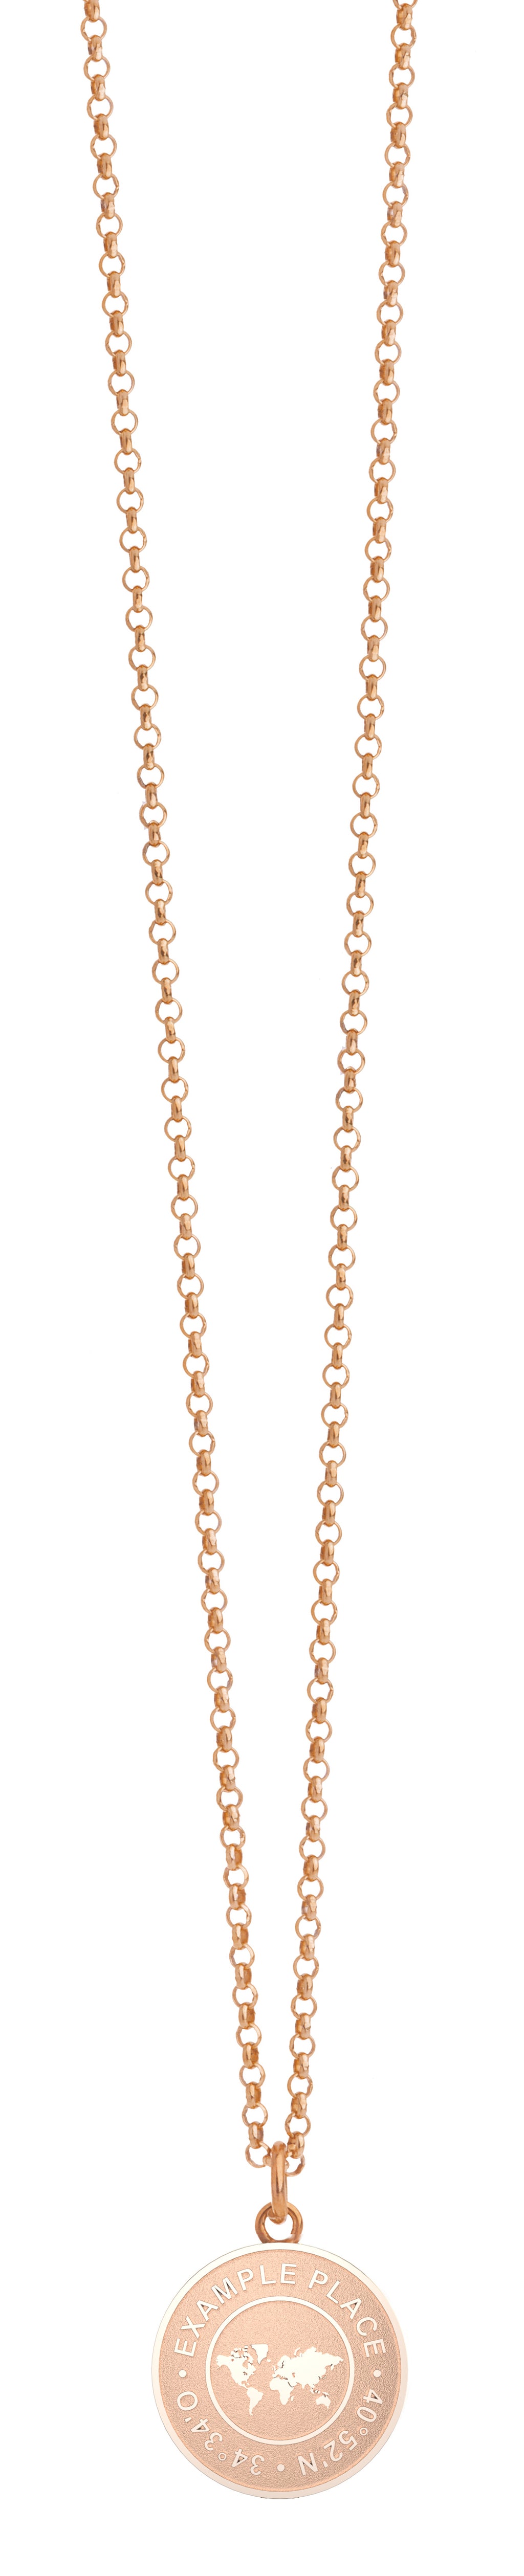 Custom Made Rose Gold Necklace